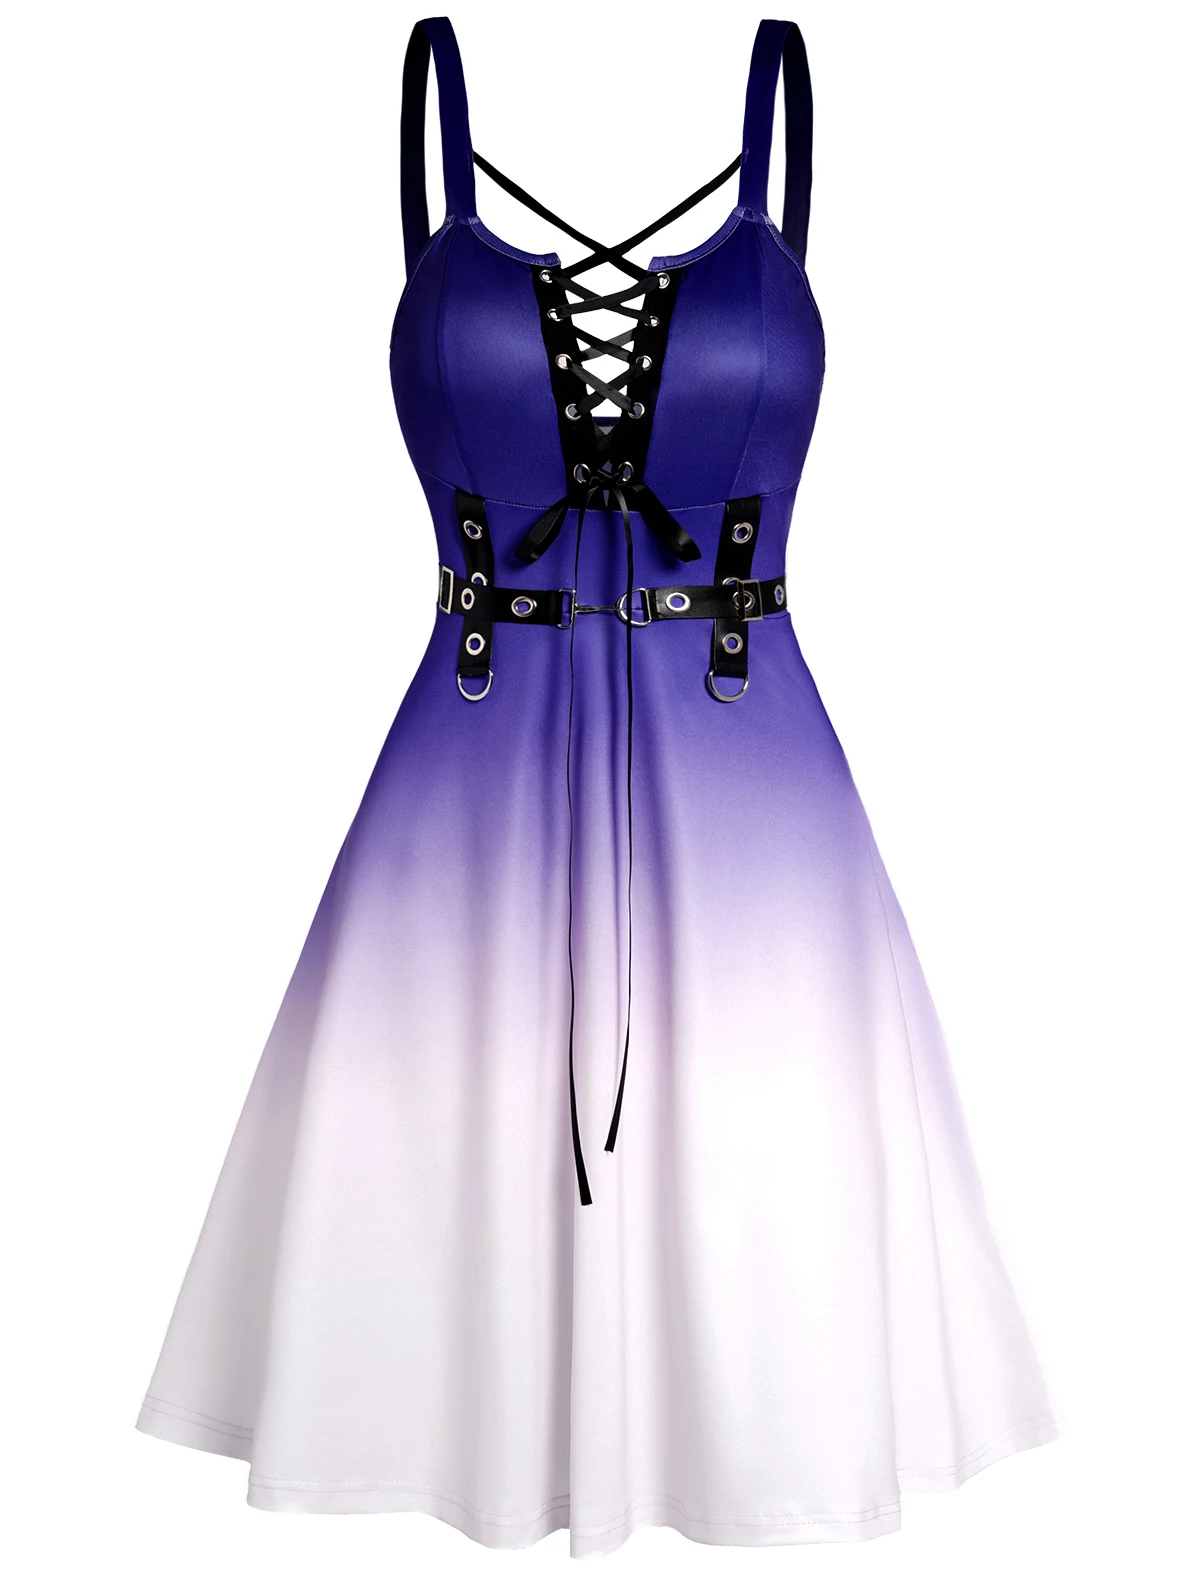 

Dressfo Sleeveless Gradient Purple Dress For Summer Women Lace Up Crisscross Grommet High Waisted Straps Mini Dress